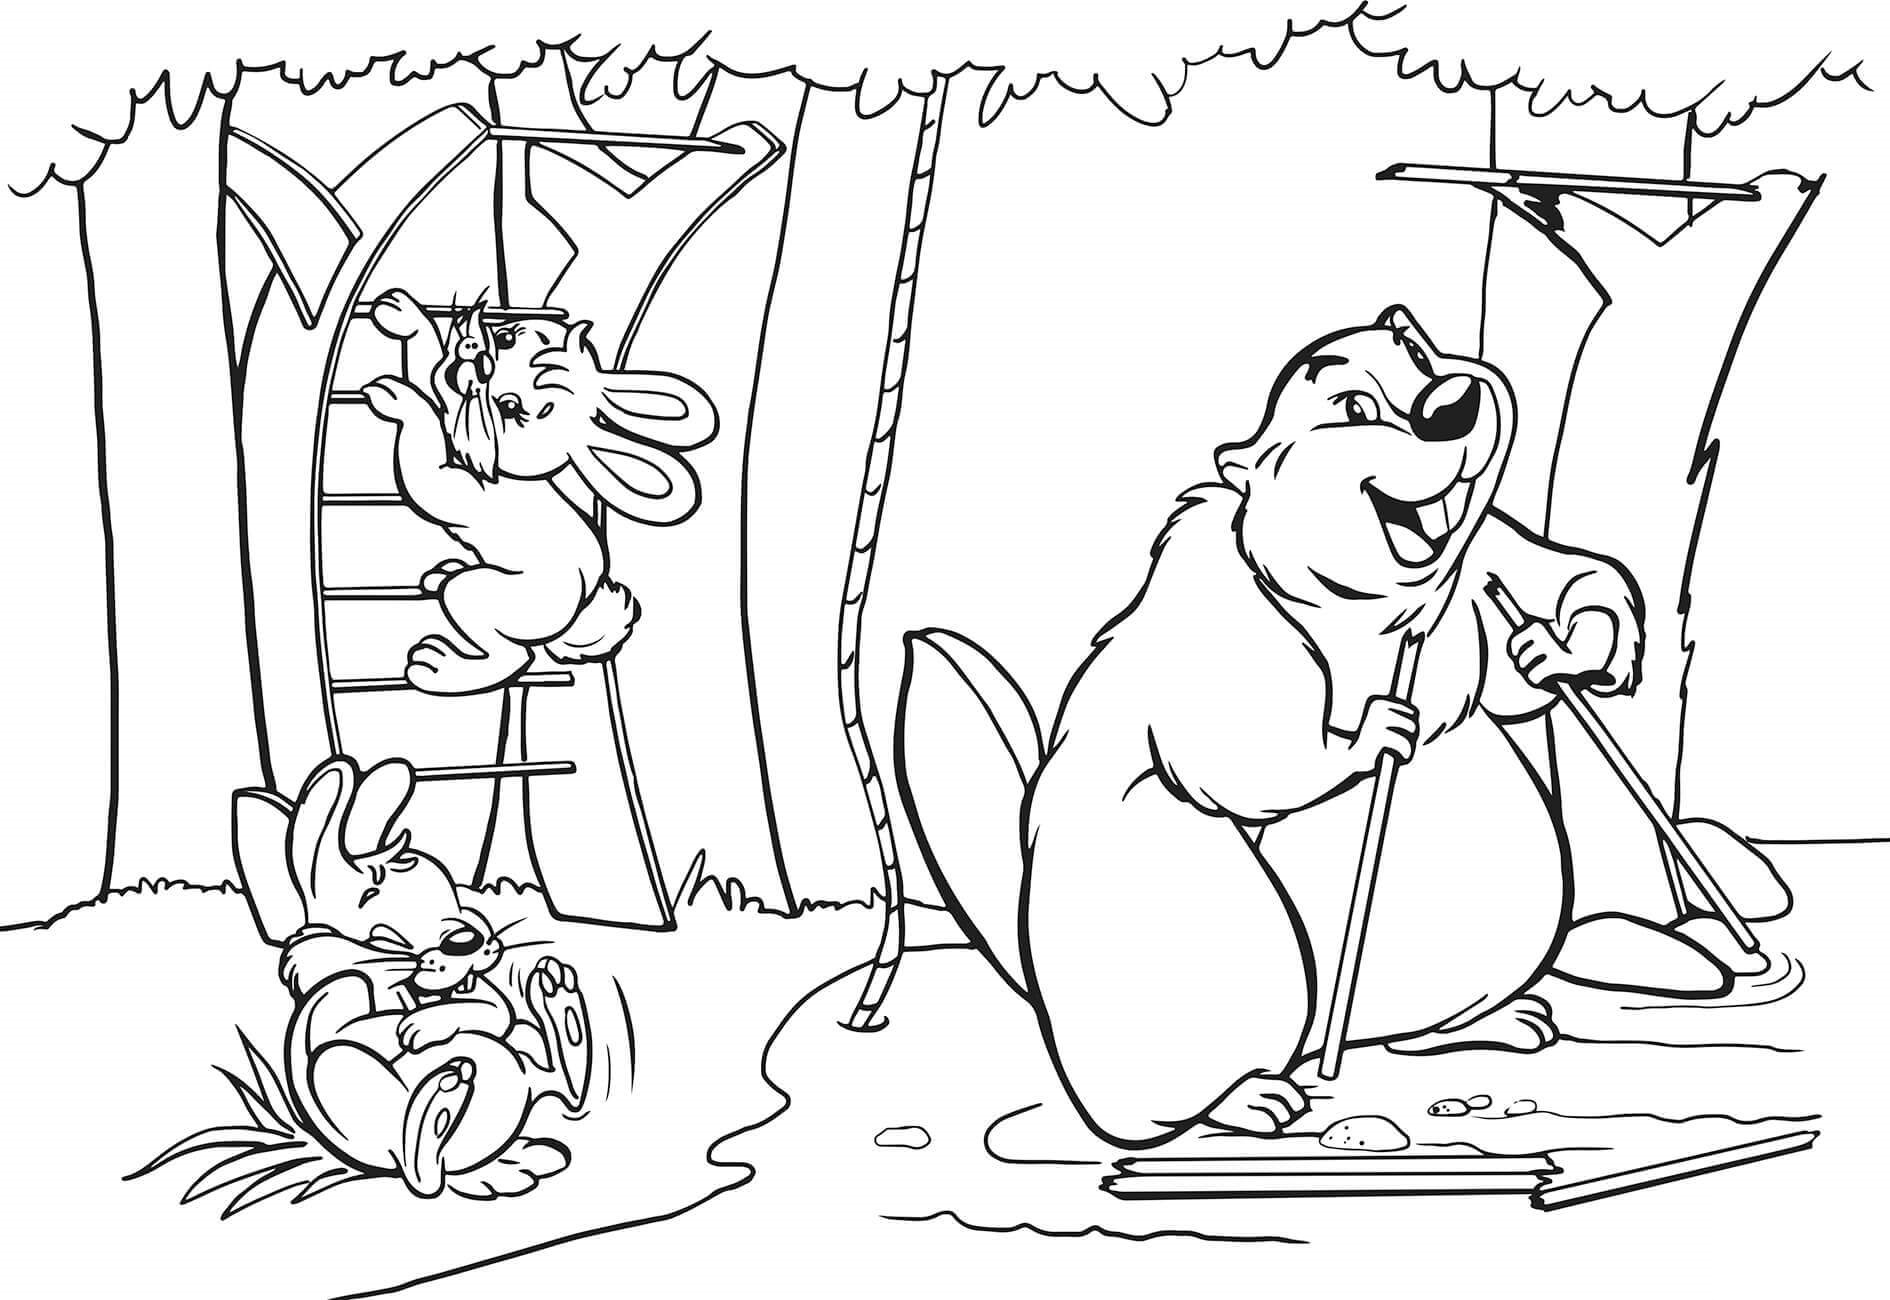 Beaver coloring inspiration